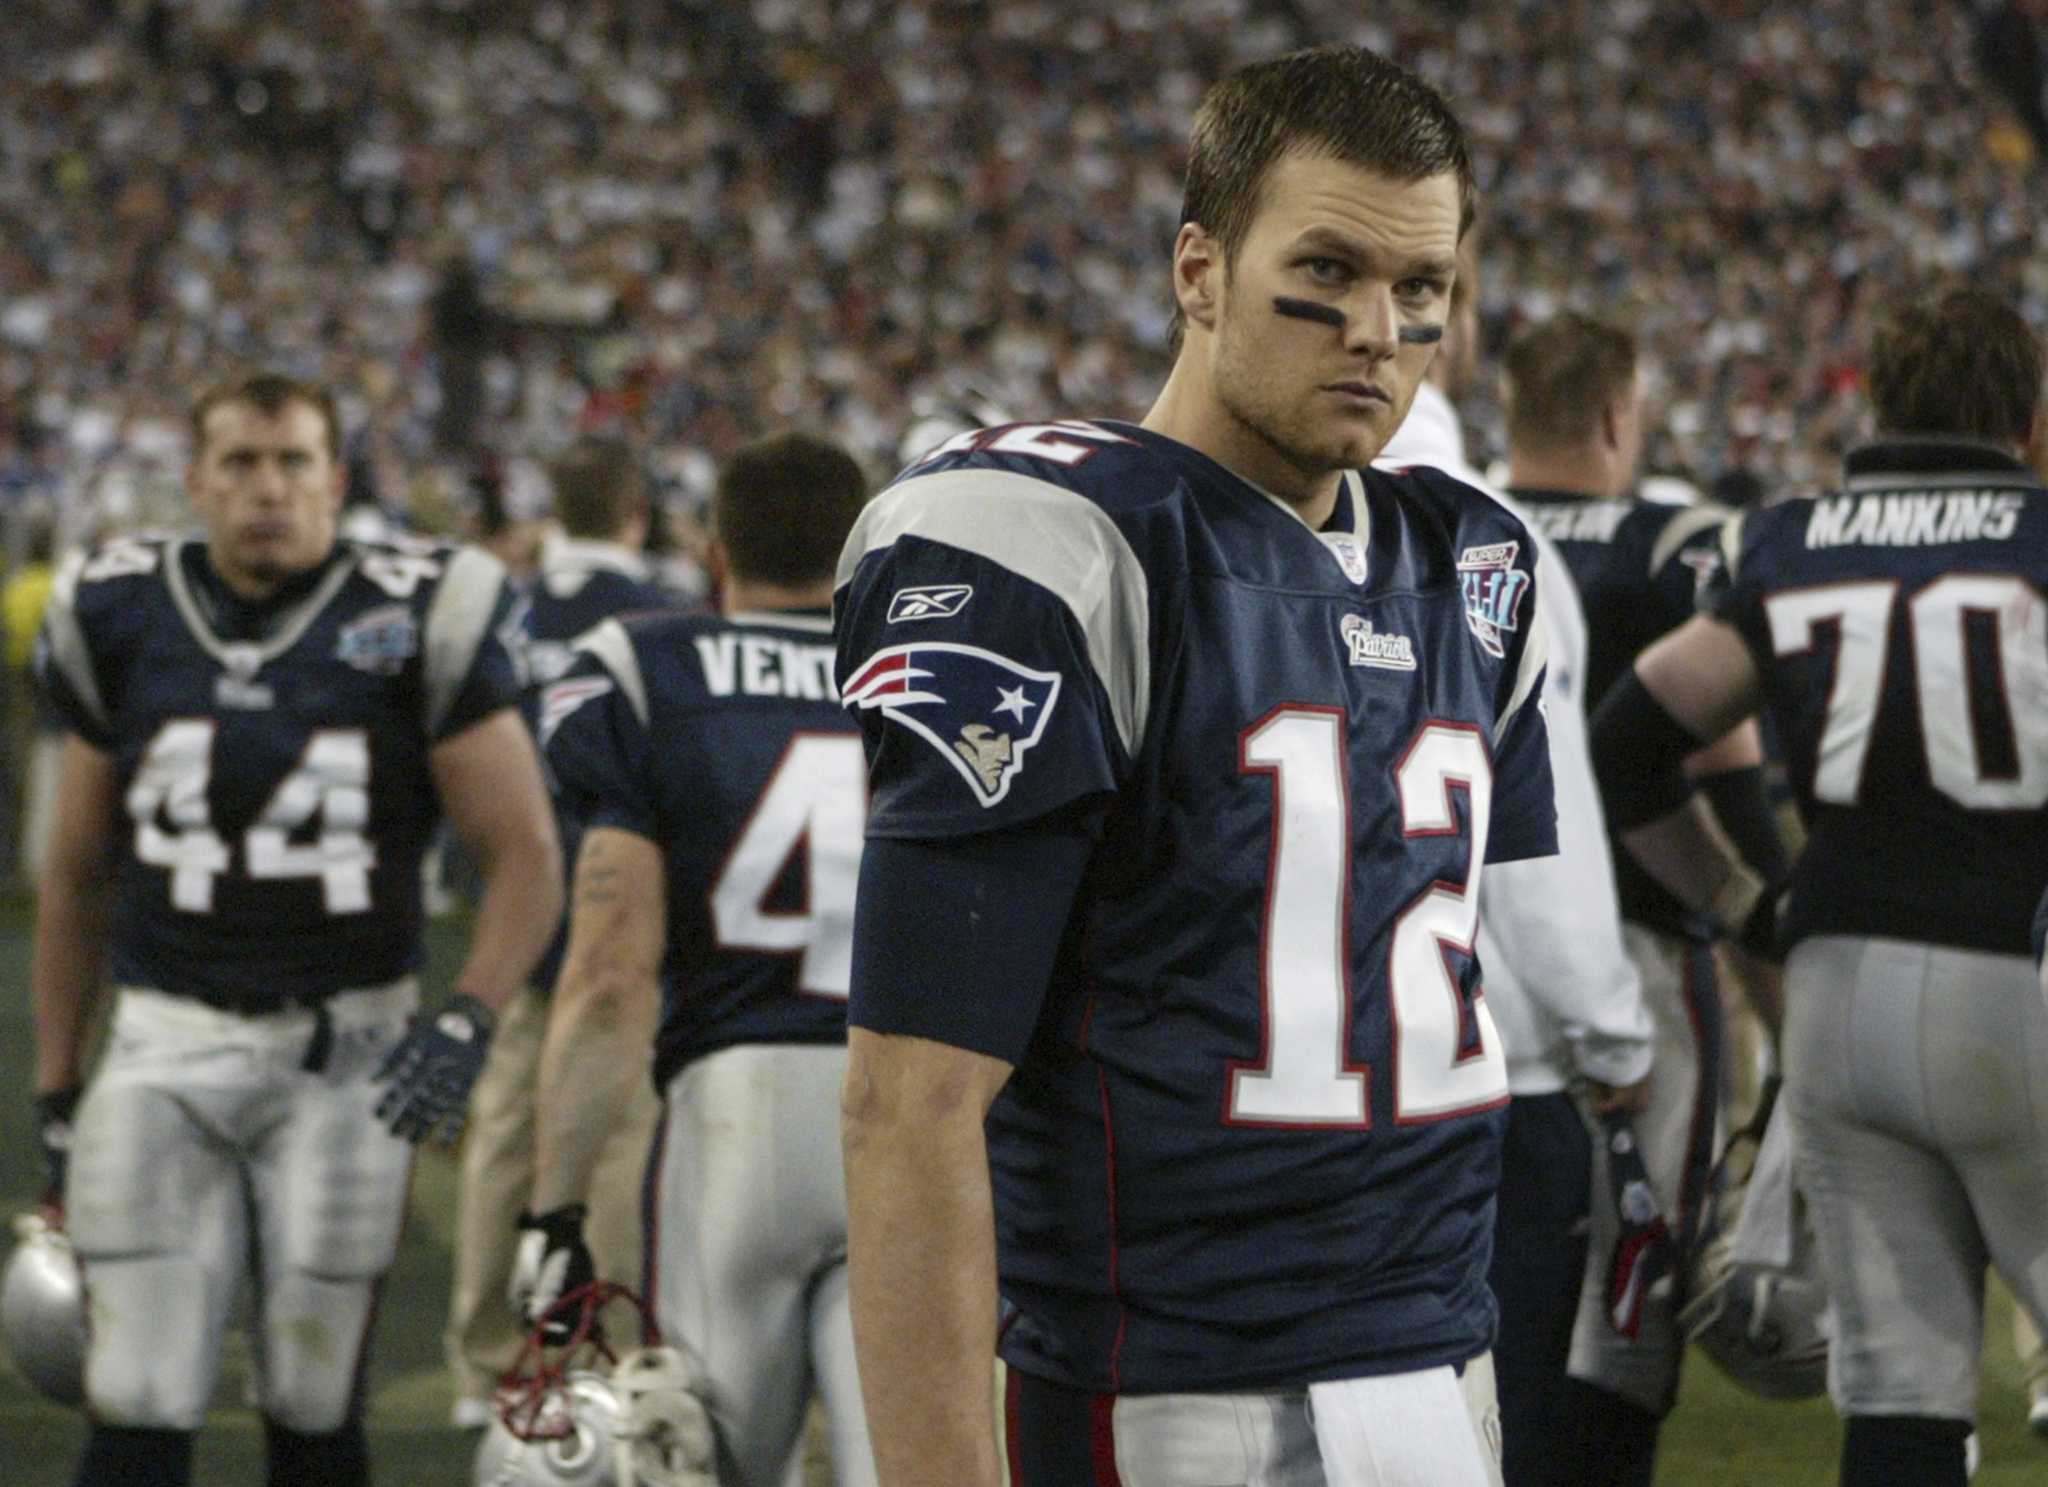 Brady with the Patriots